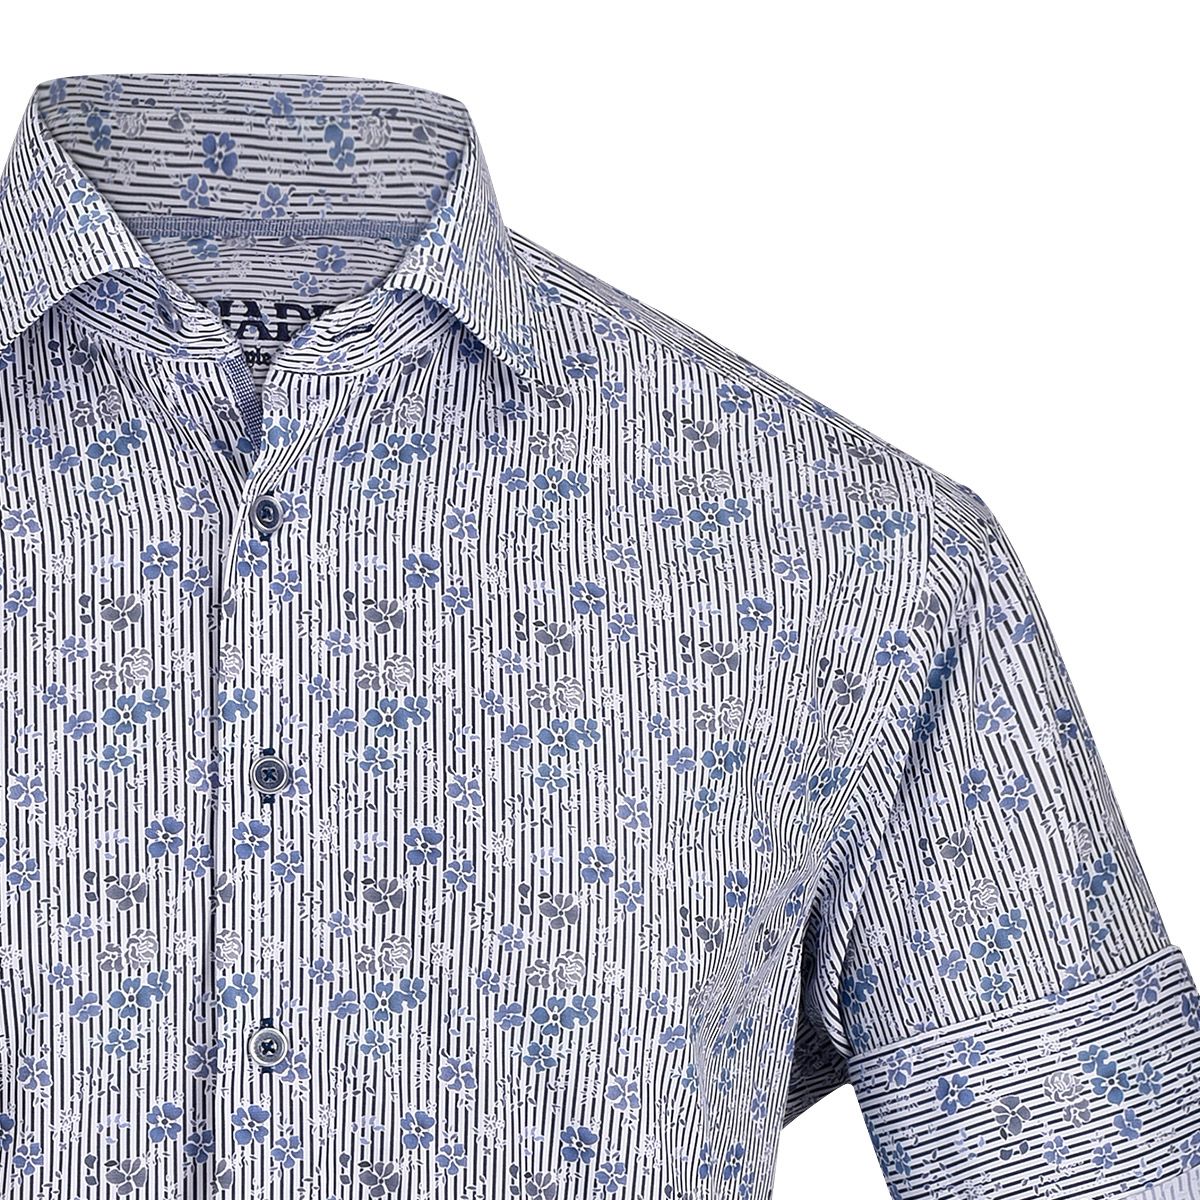 CM00106 - Cuadra blue fashion western long sleeve cotton shirt for men-CUADRA-Kuet-Cuadra-Boots